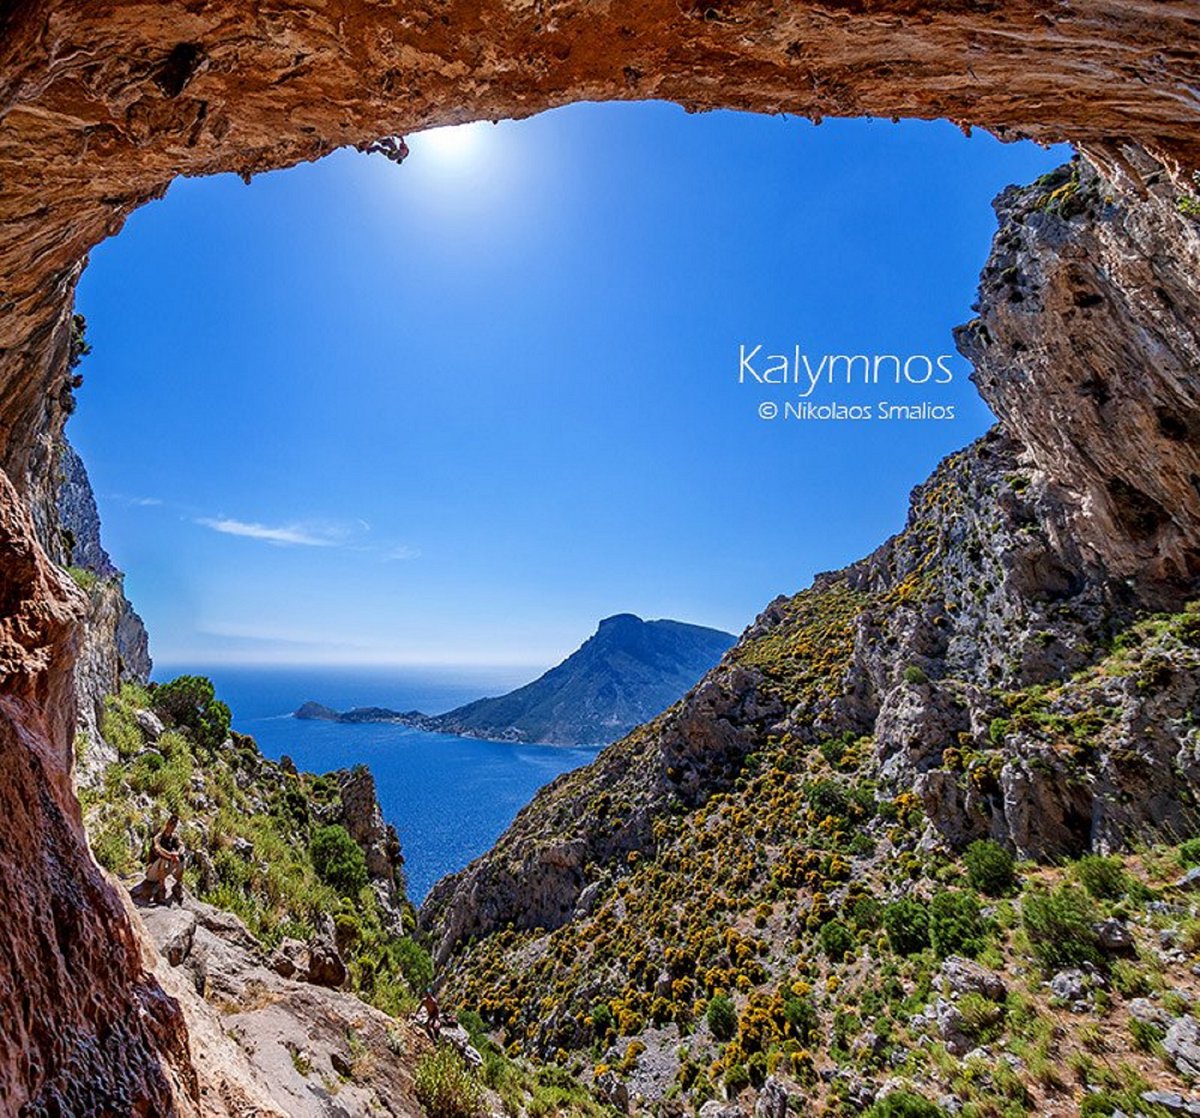 #kalymnosisland #dodecanese #greece #beachholidays #climbingholidays #divingholidays #kalymniangastronomy #religioustourism #adventuretravel